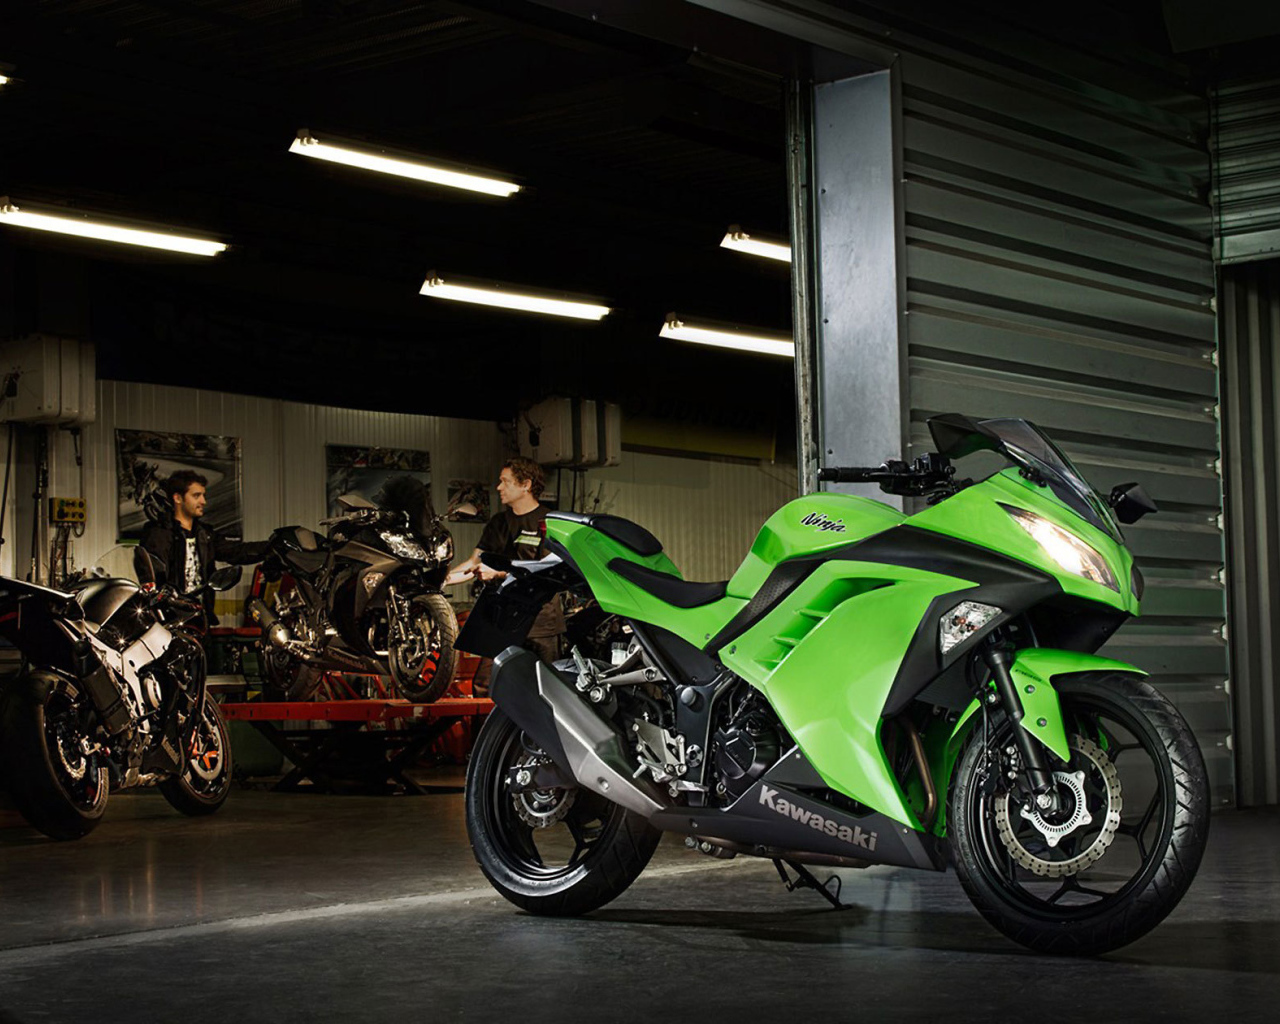 Новый надежный мотоцикл Kawasaki Ninja 300